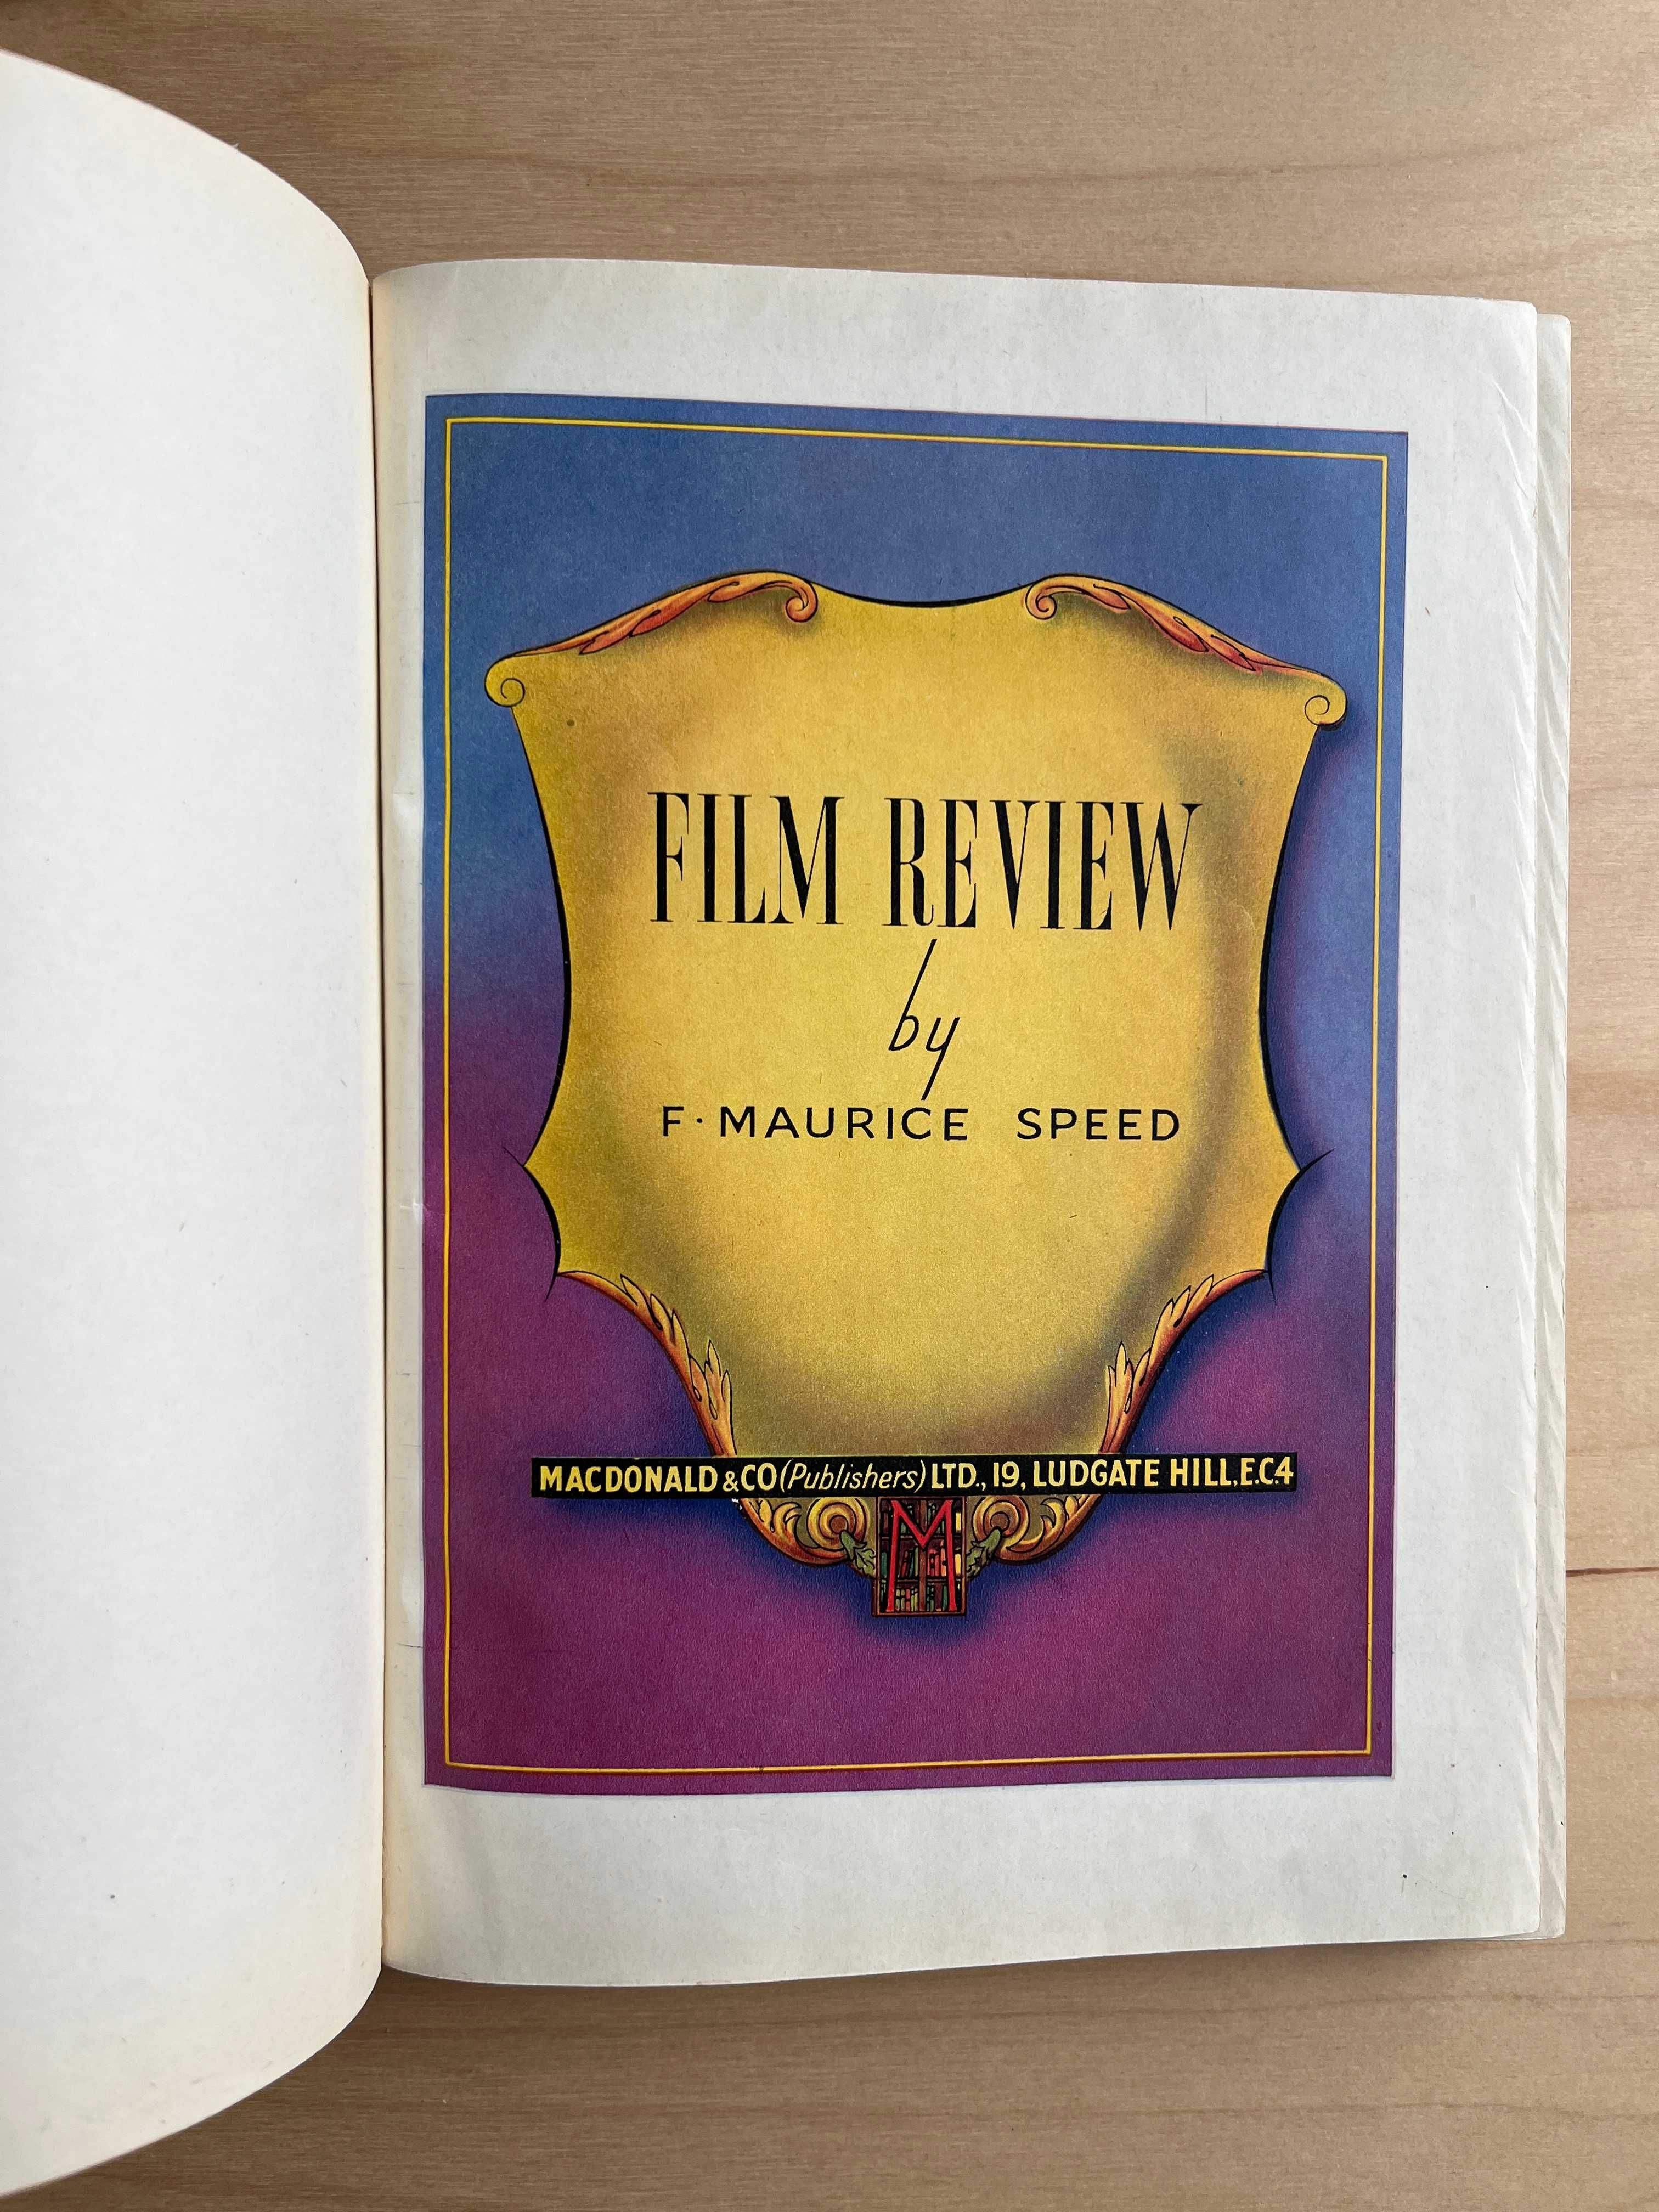 Film Review by F. Maurice Speed album książka, stare kino, 1948 rok